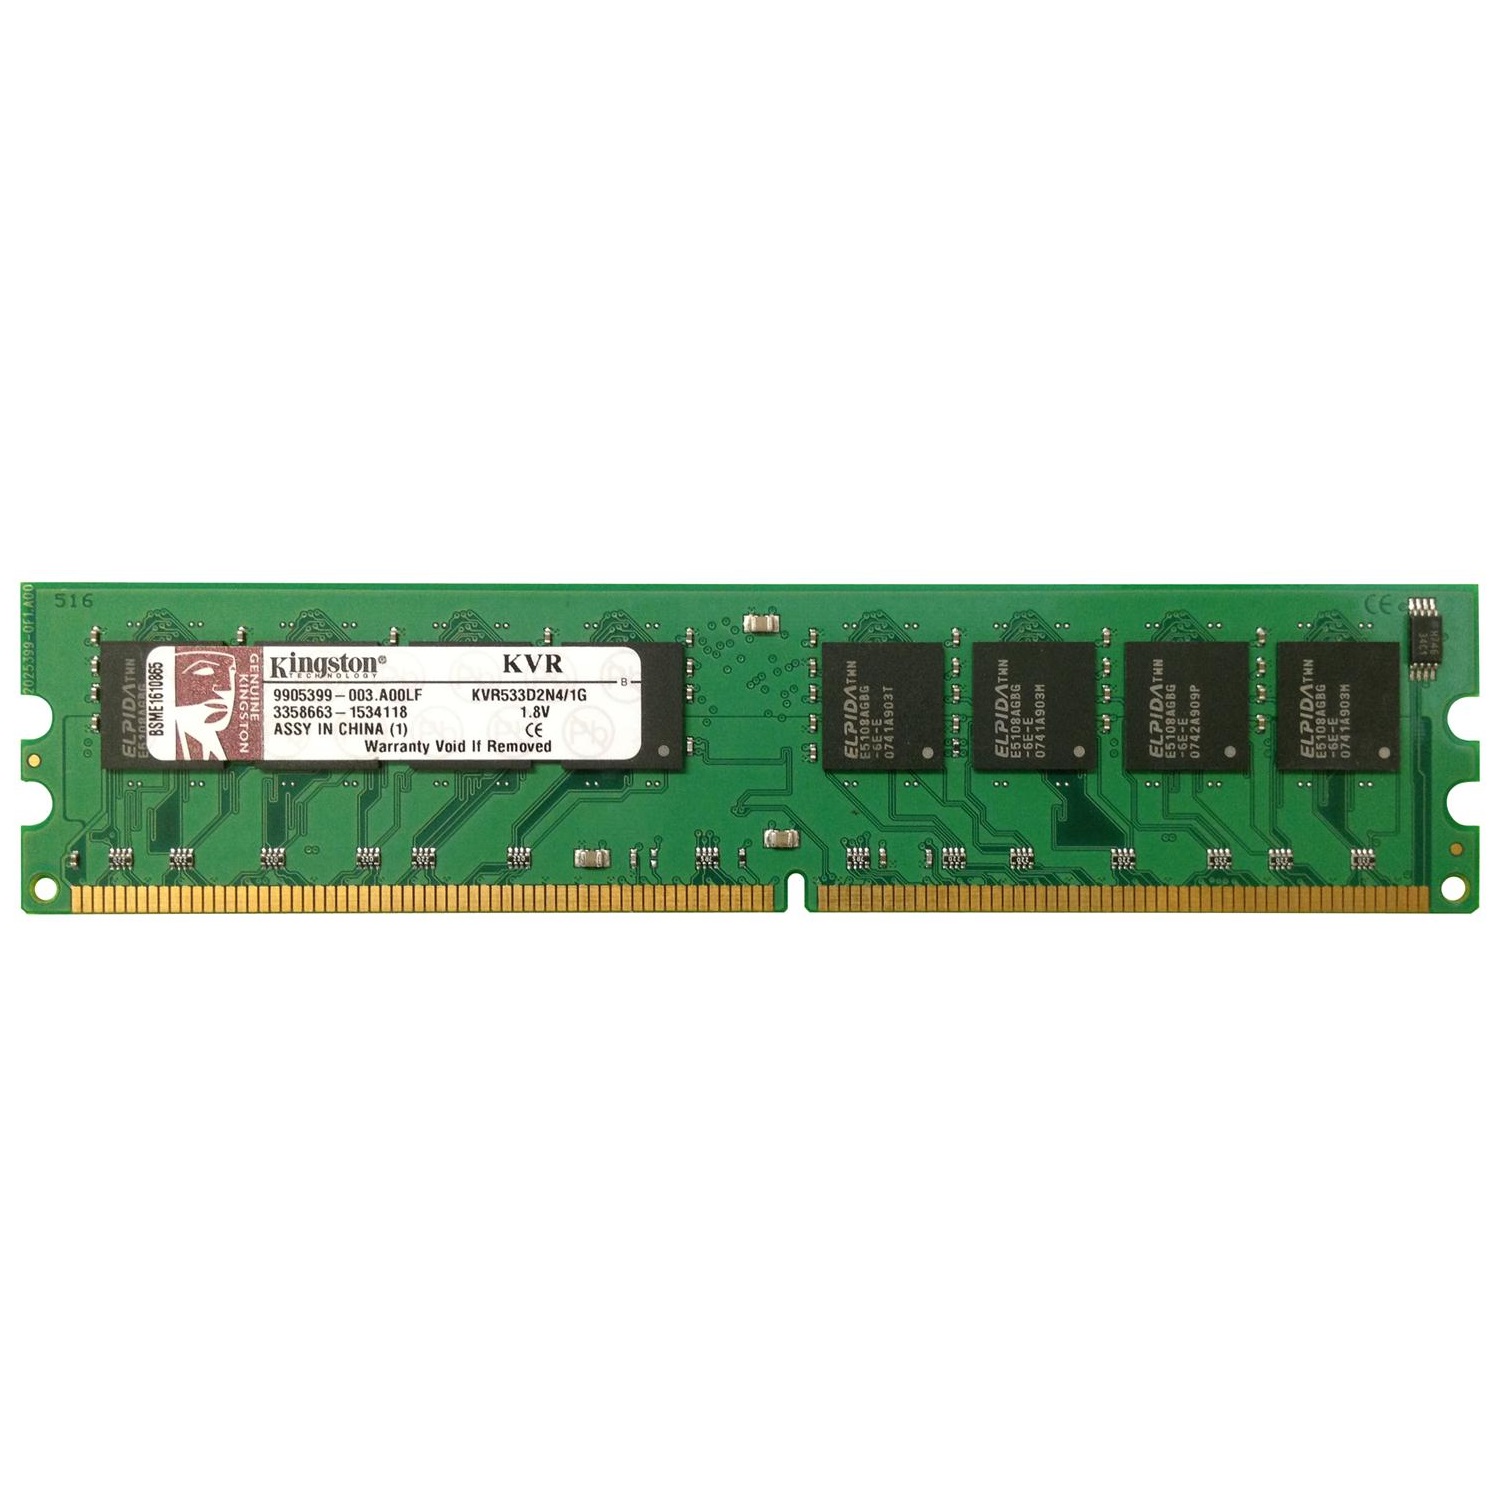 رم دسکتاپ DDR2 تک کاناله 533 مگاهرتز CL4 کینگستون مدل KVR533D2N4/1G ظرفیت 1 گیگابایت